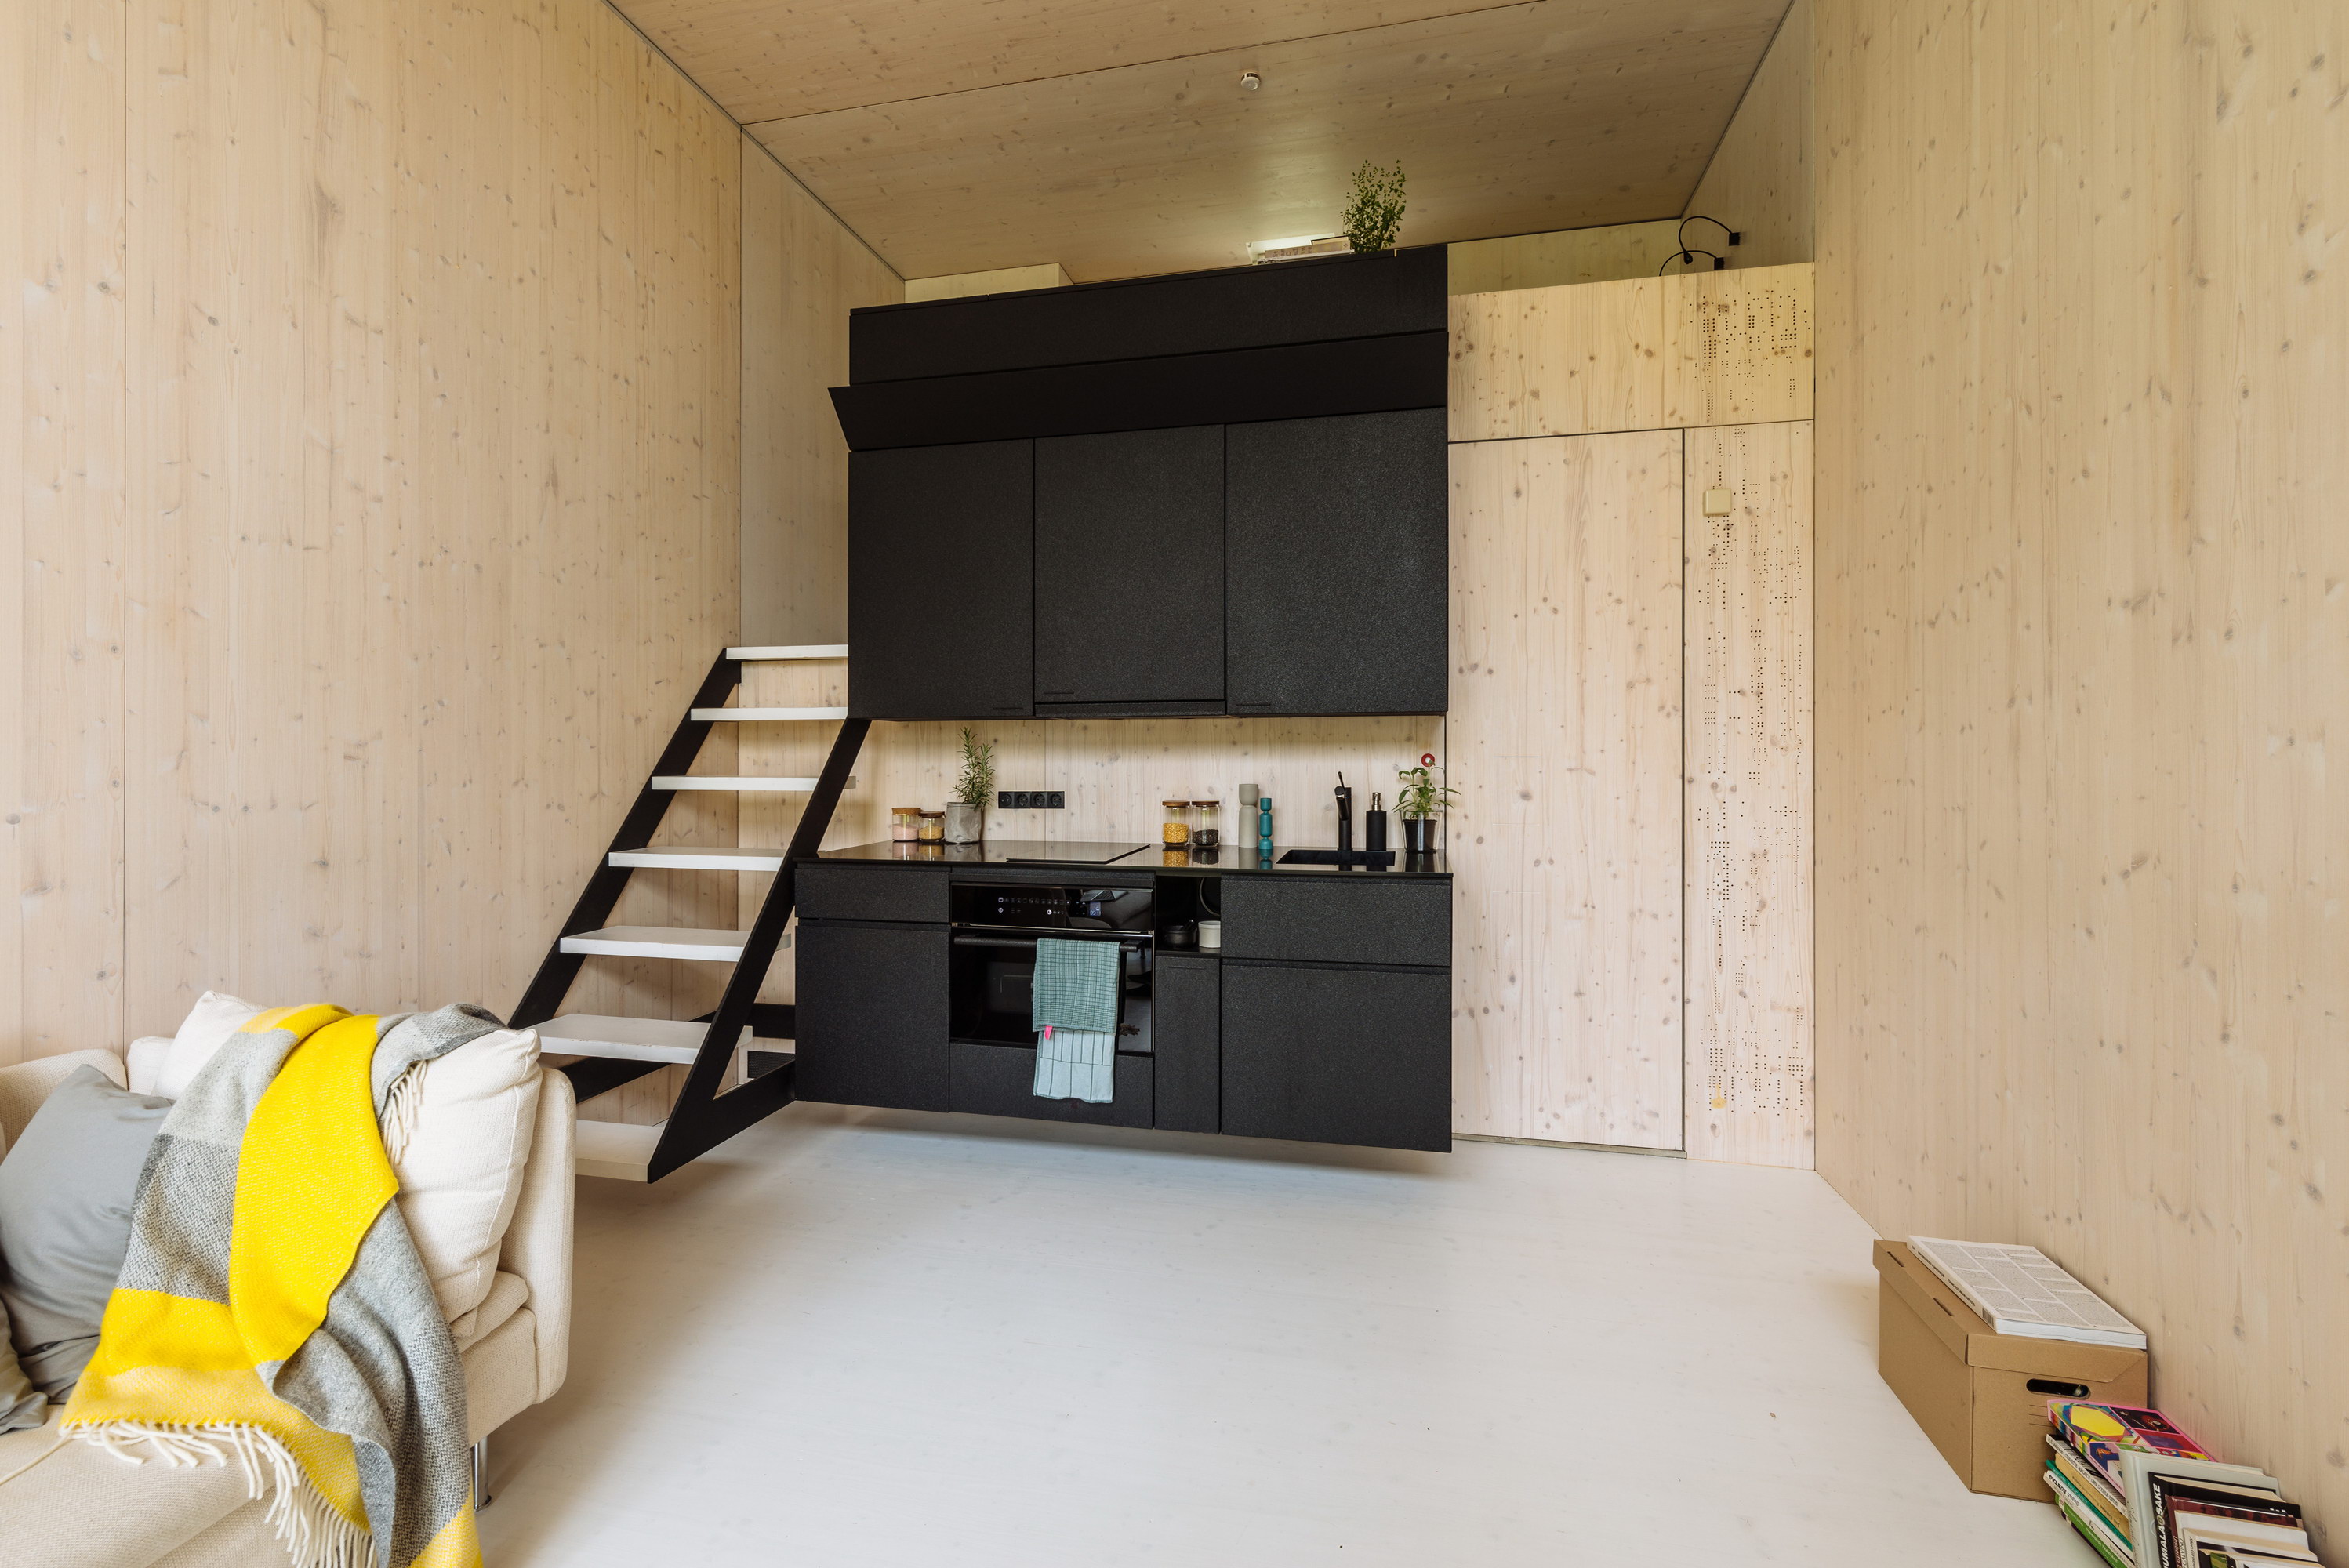 KODA | Prefabricated Tiny House by Kodasema